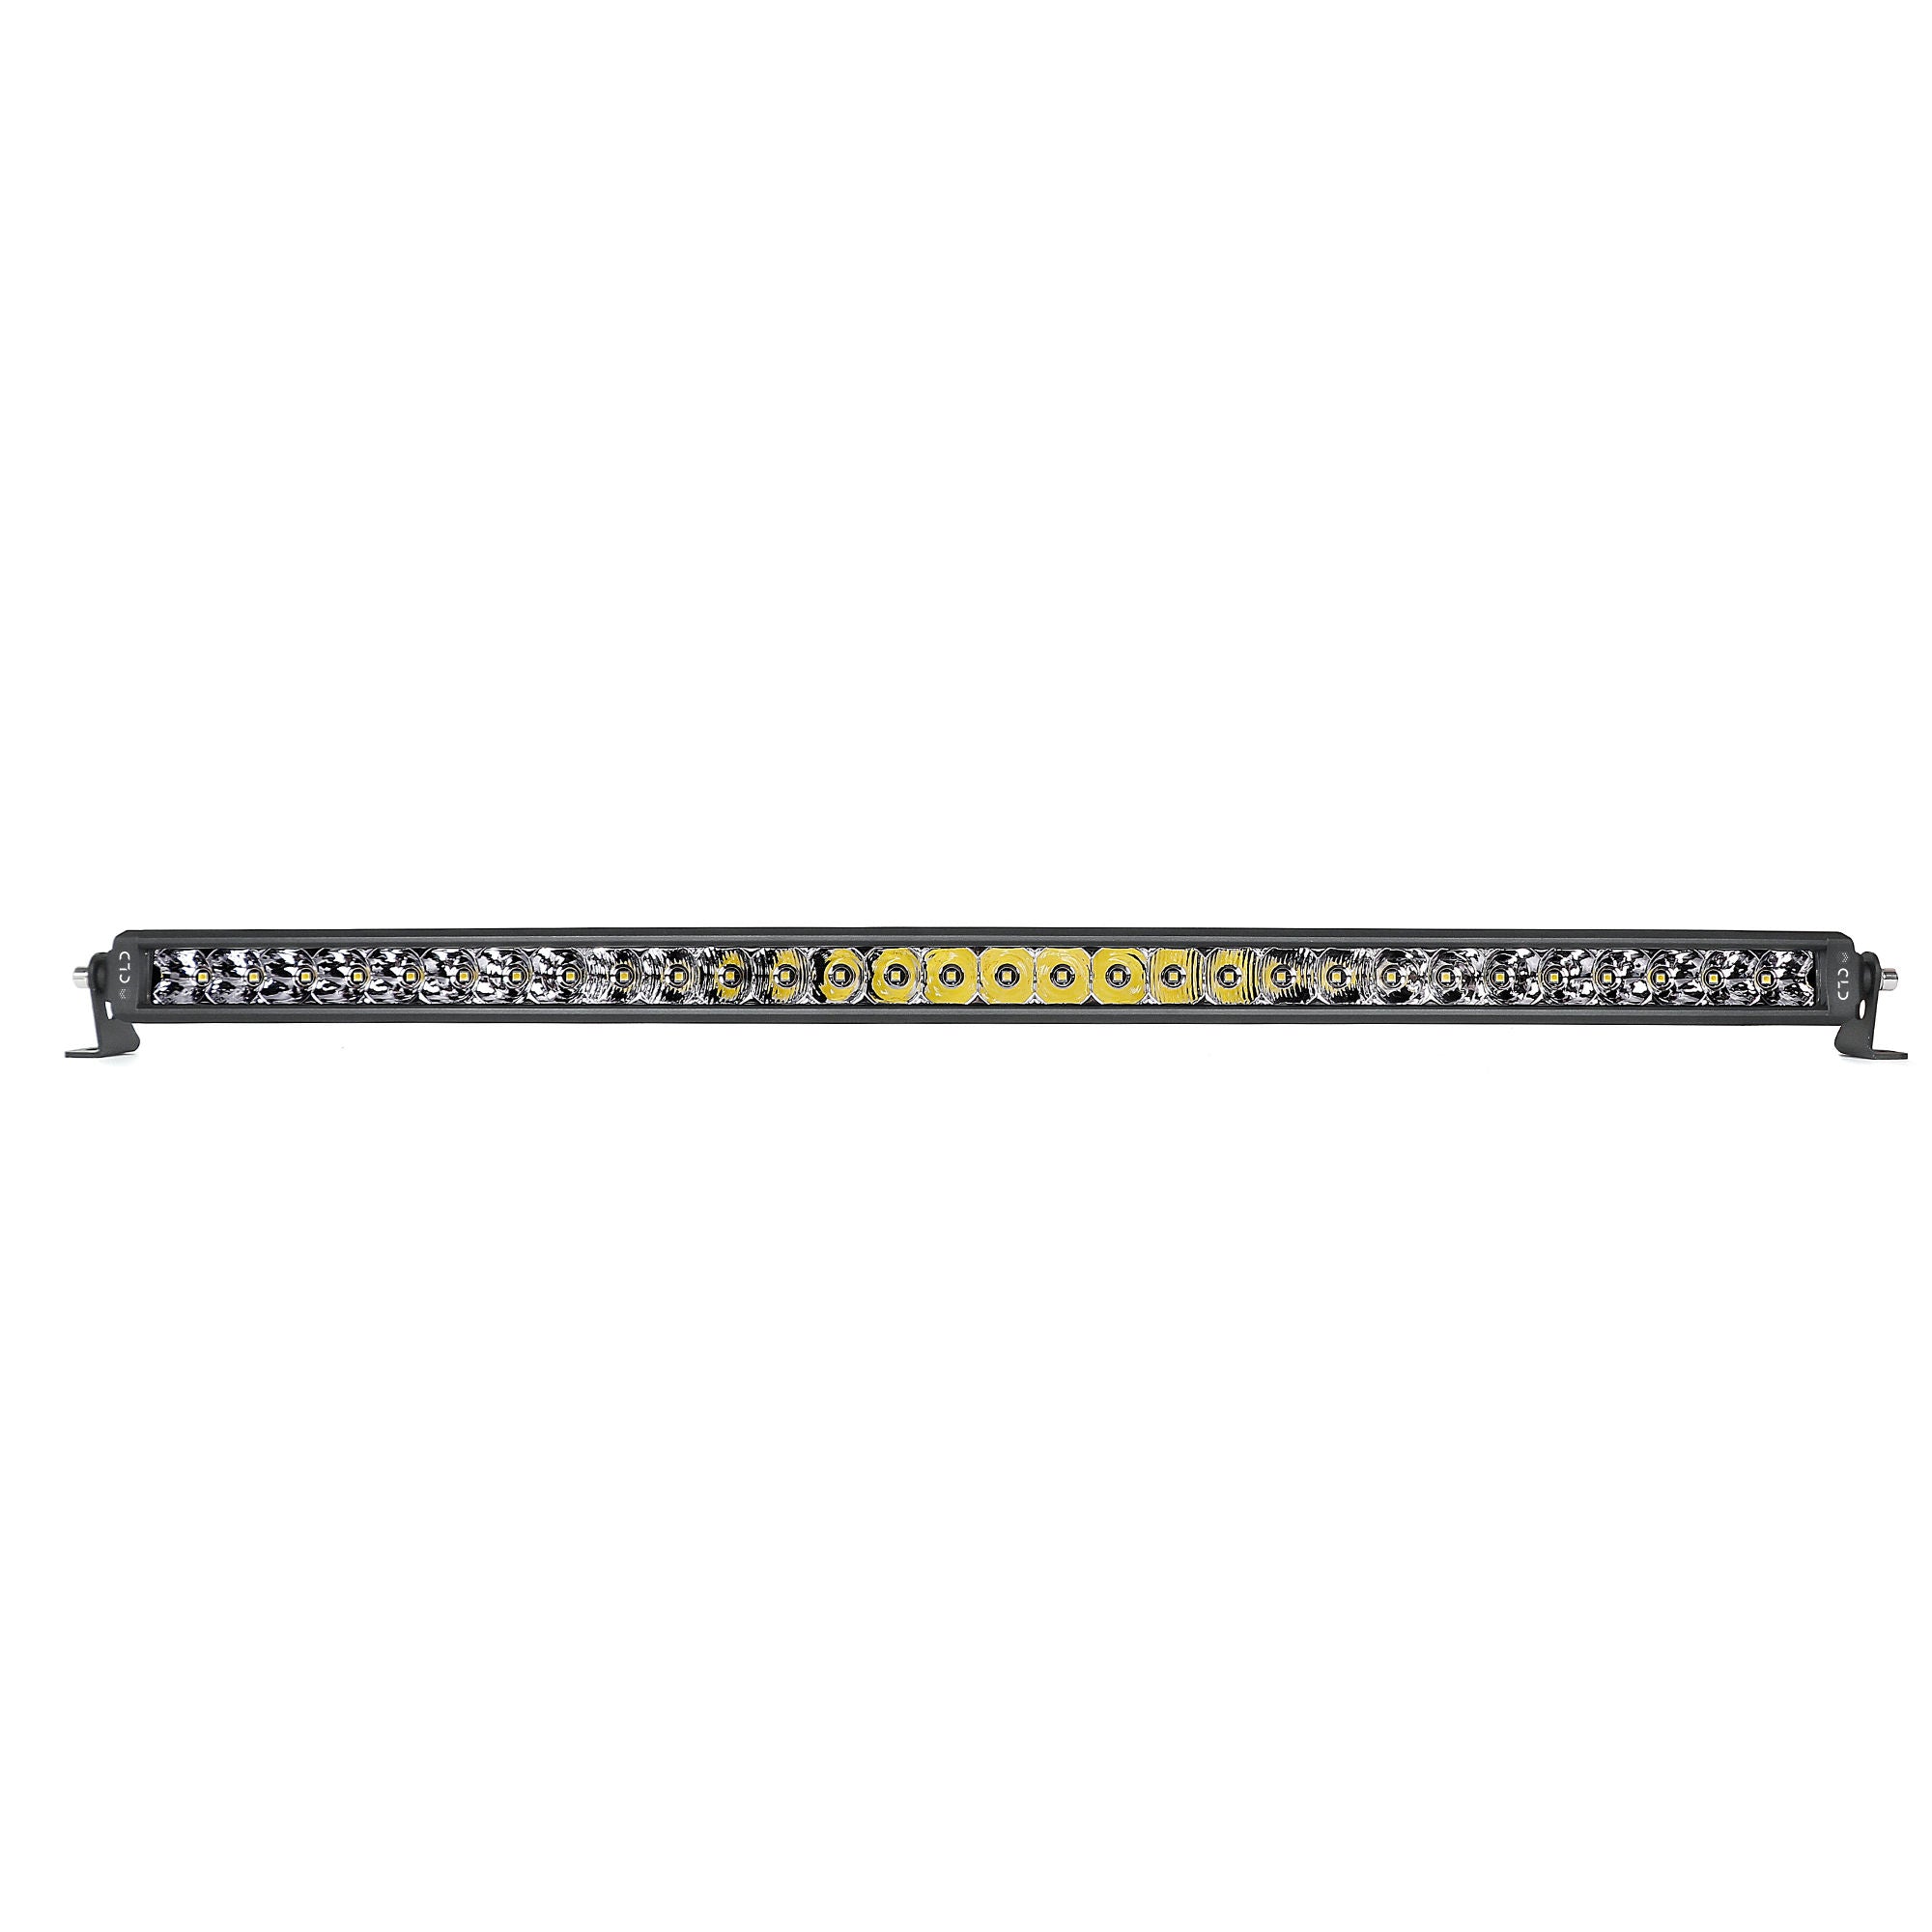 CLD CLDBAR30C - 30" Curved Single Row Spot/Flood Combo Beam LED Light Bar - 8560 Lumens